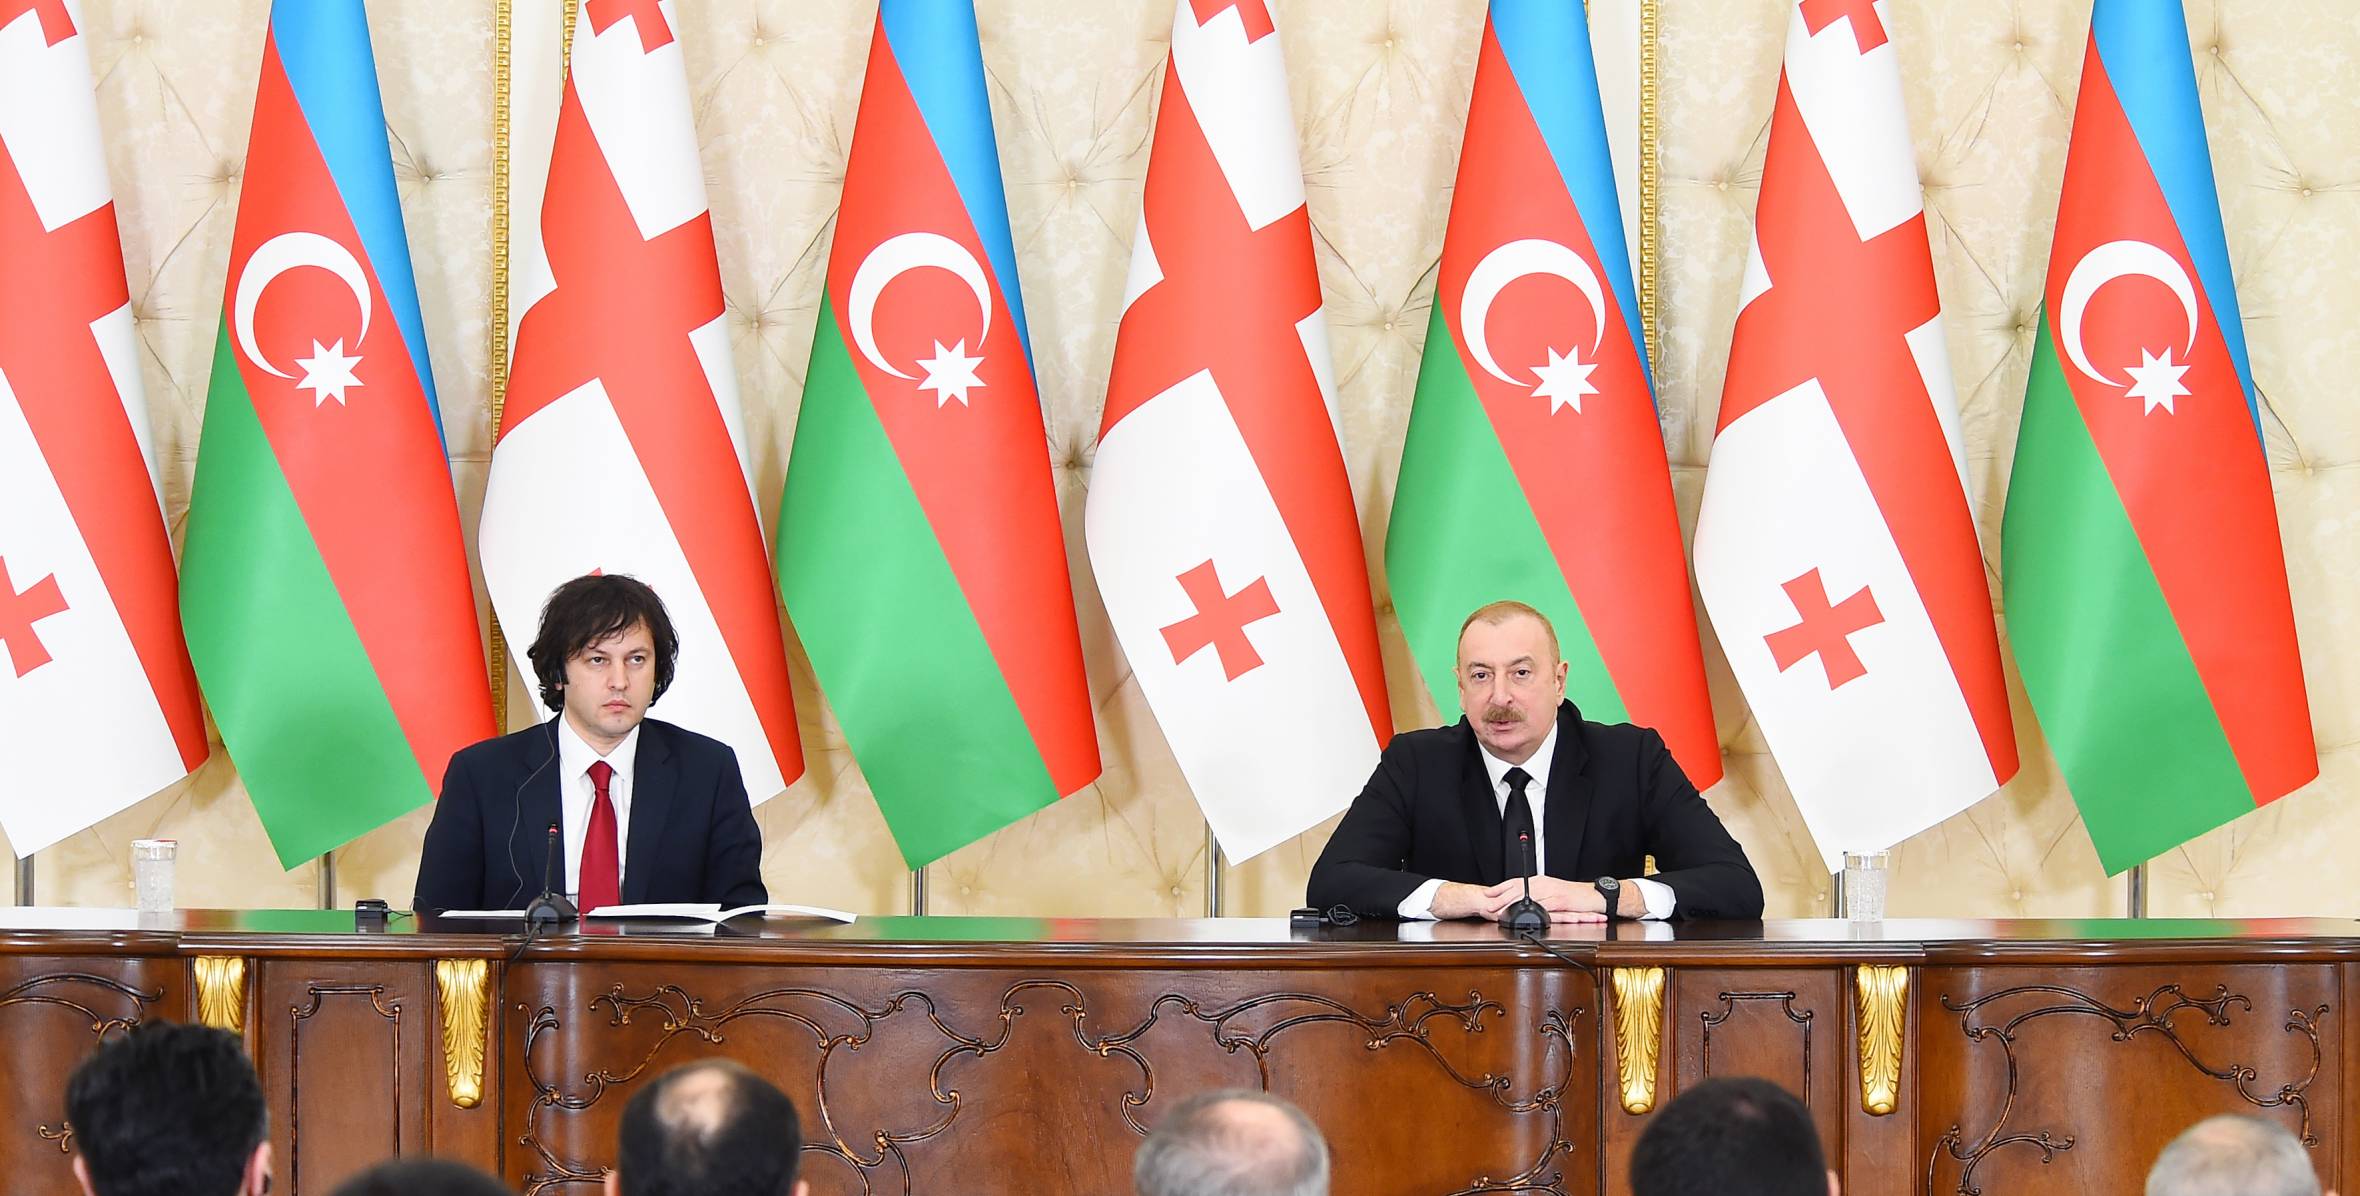 Ilham Aliyev and Prime Minister Irakli Kobakhidze made press statements